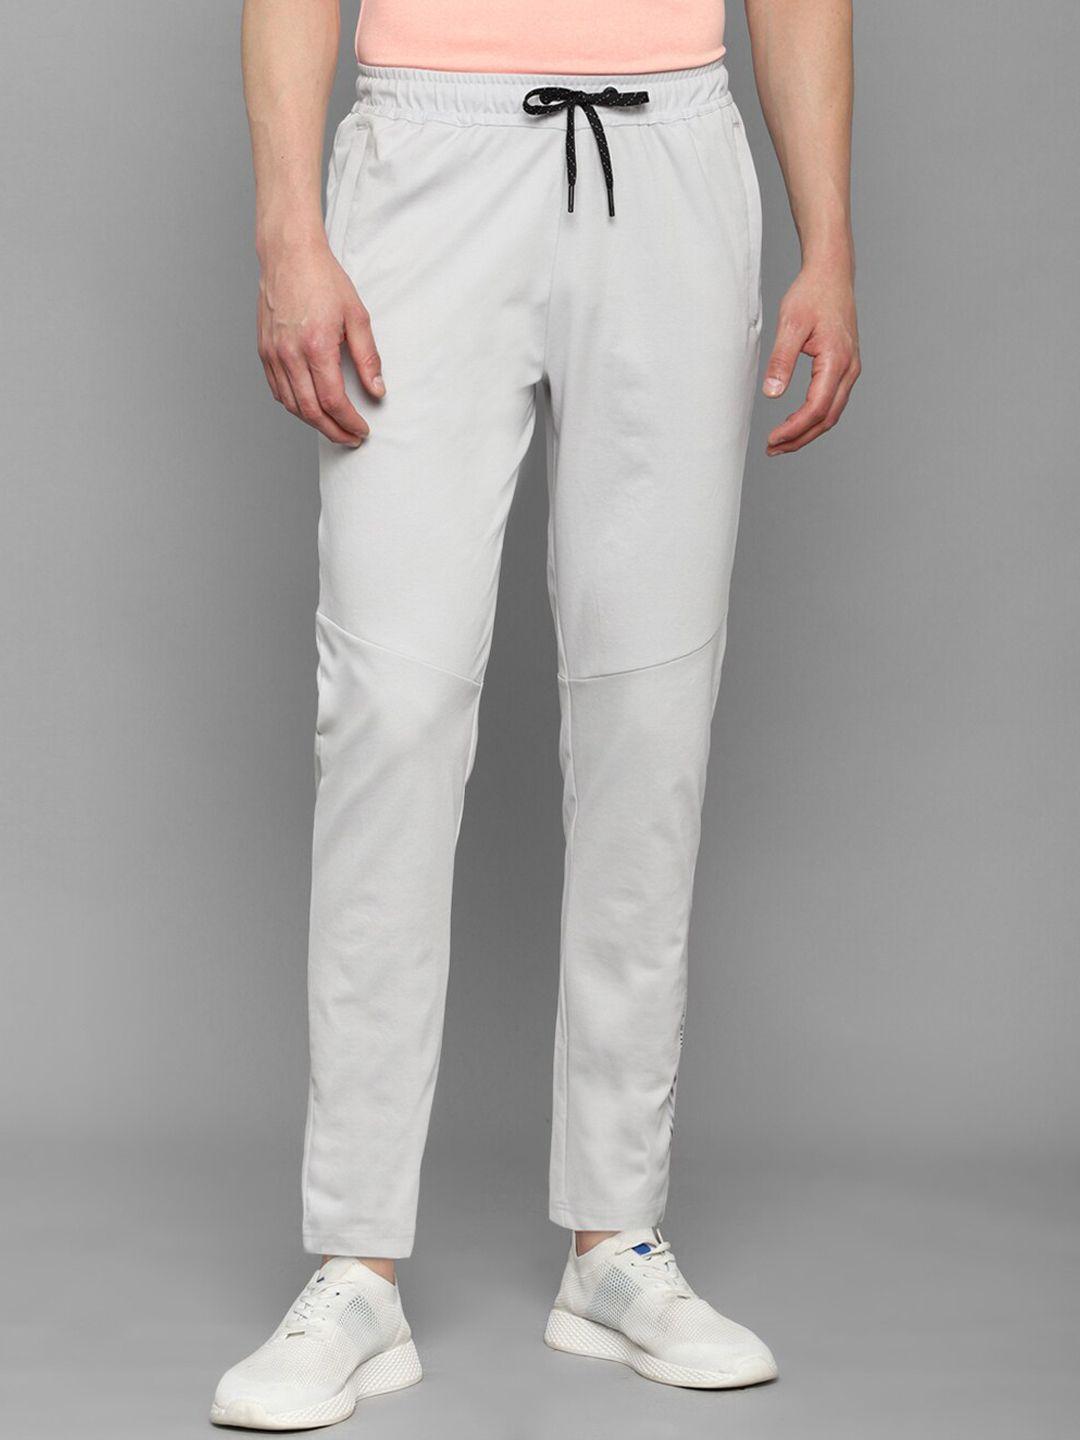 louis philippe men solid grey cotton track pants